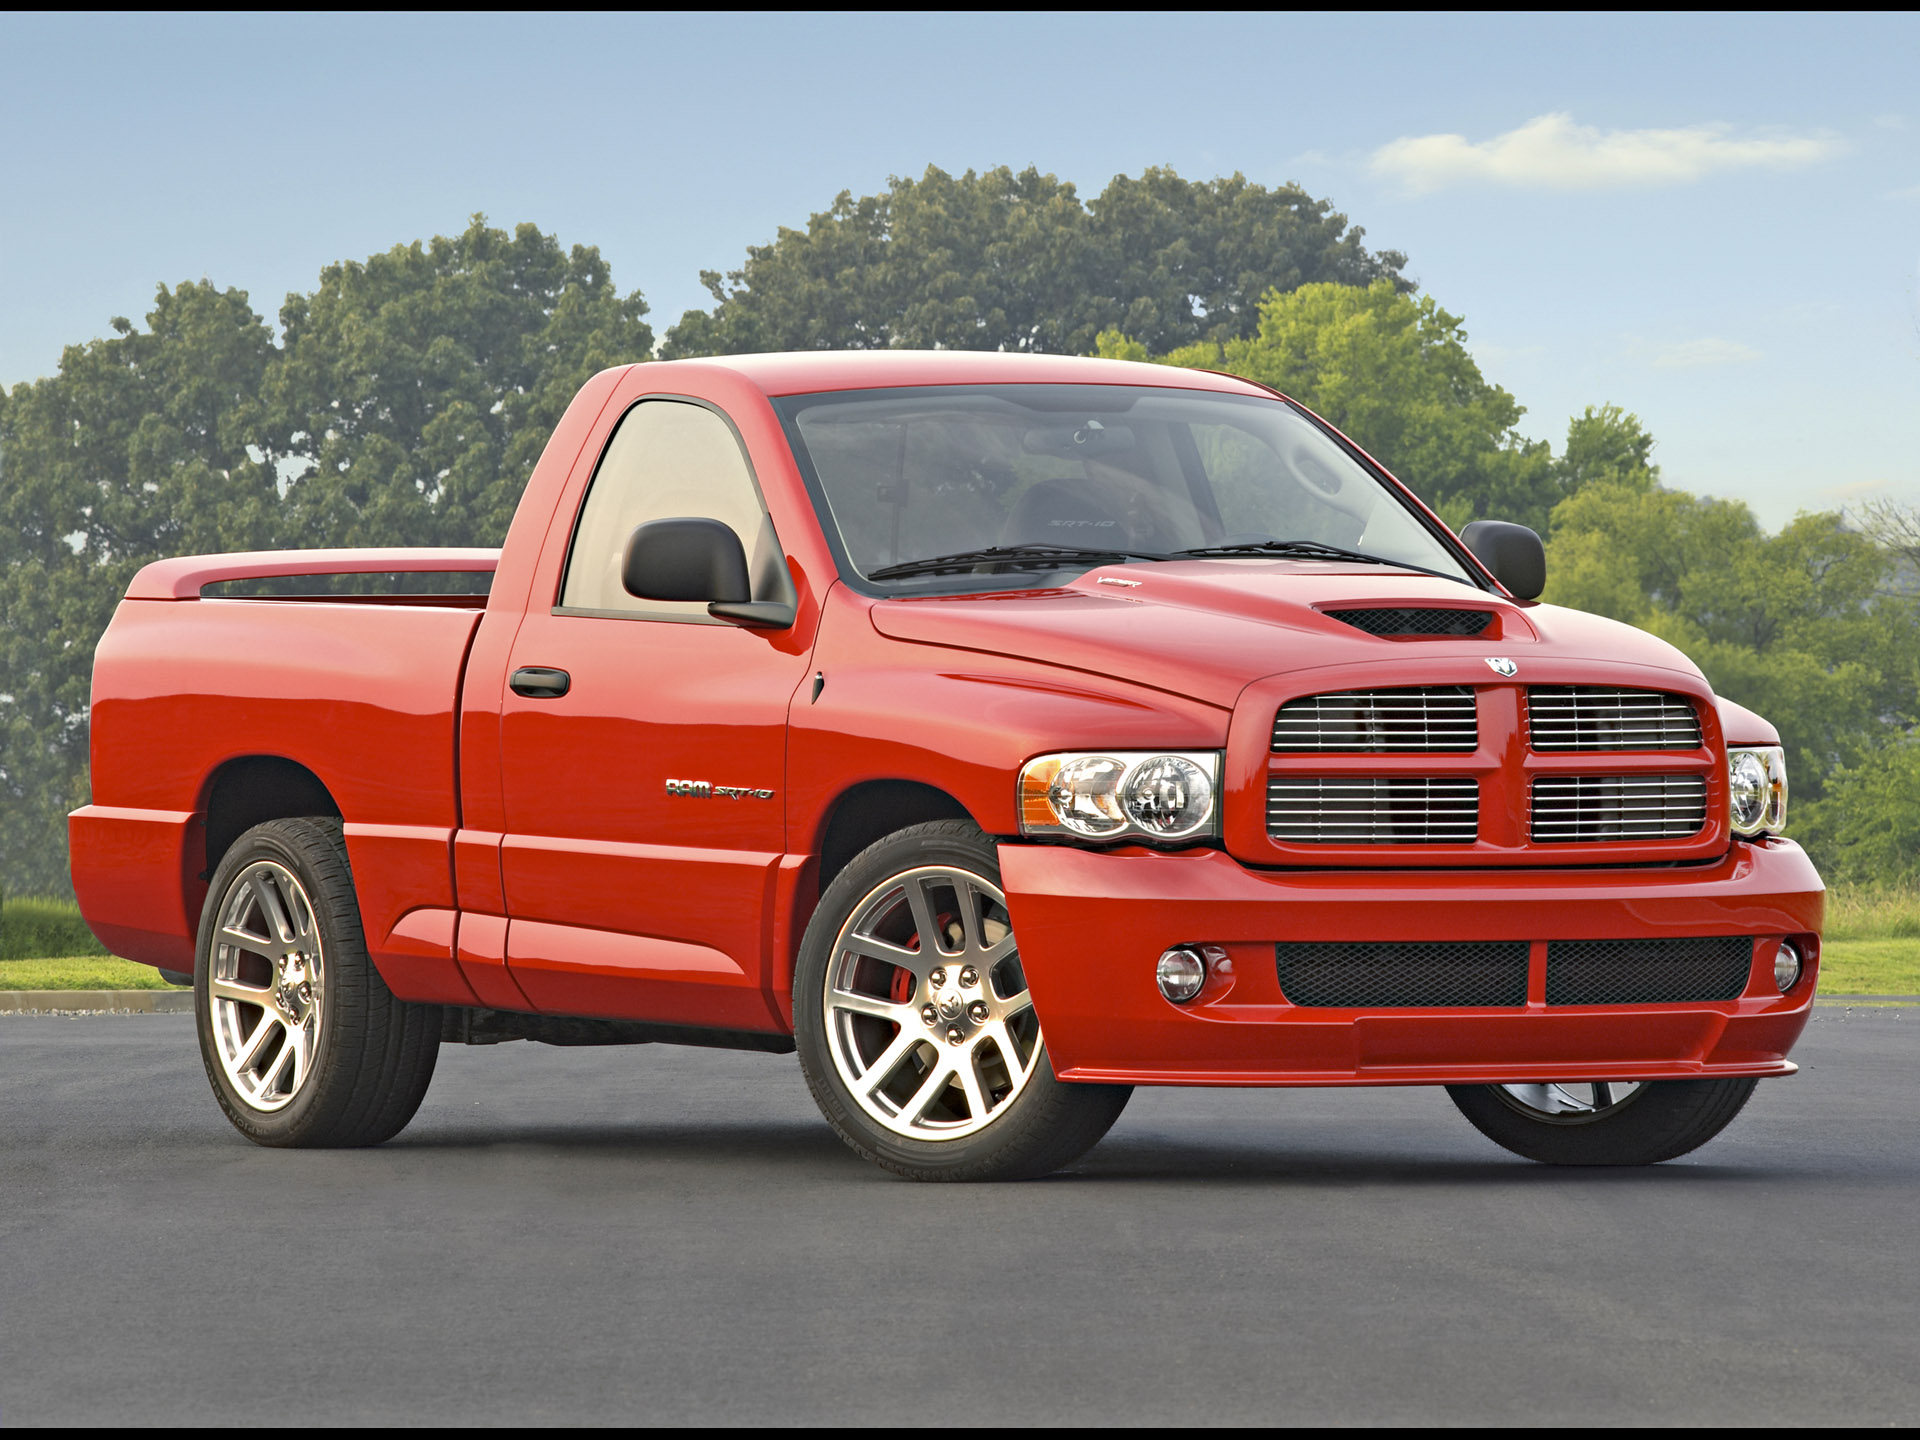 2004 Dodge Ram SRT-10 - Red - Front Angle - 1920x1440 Wallpaper